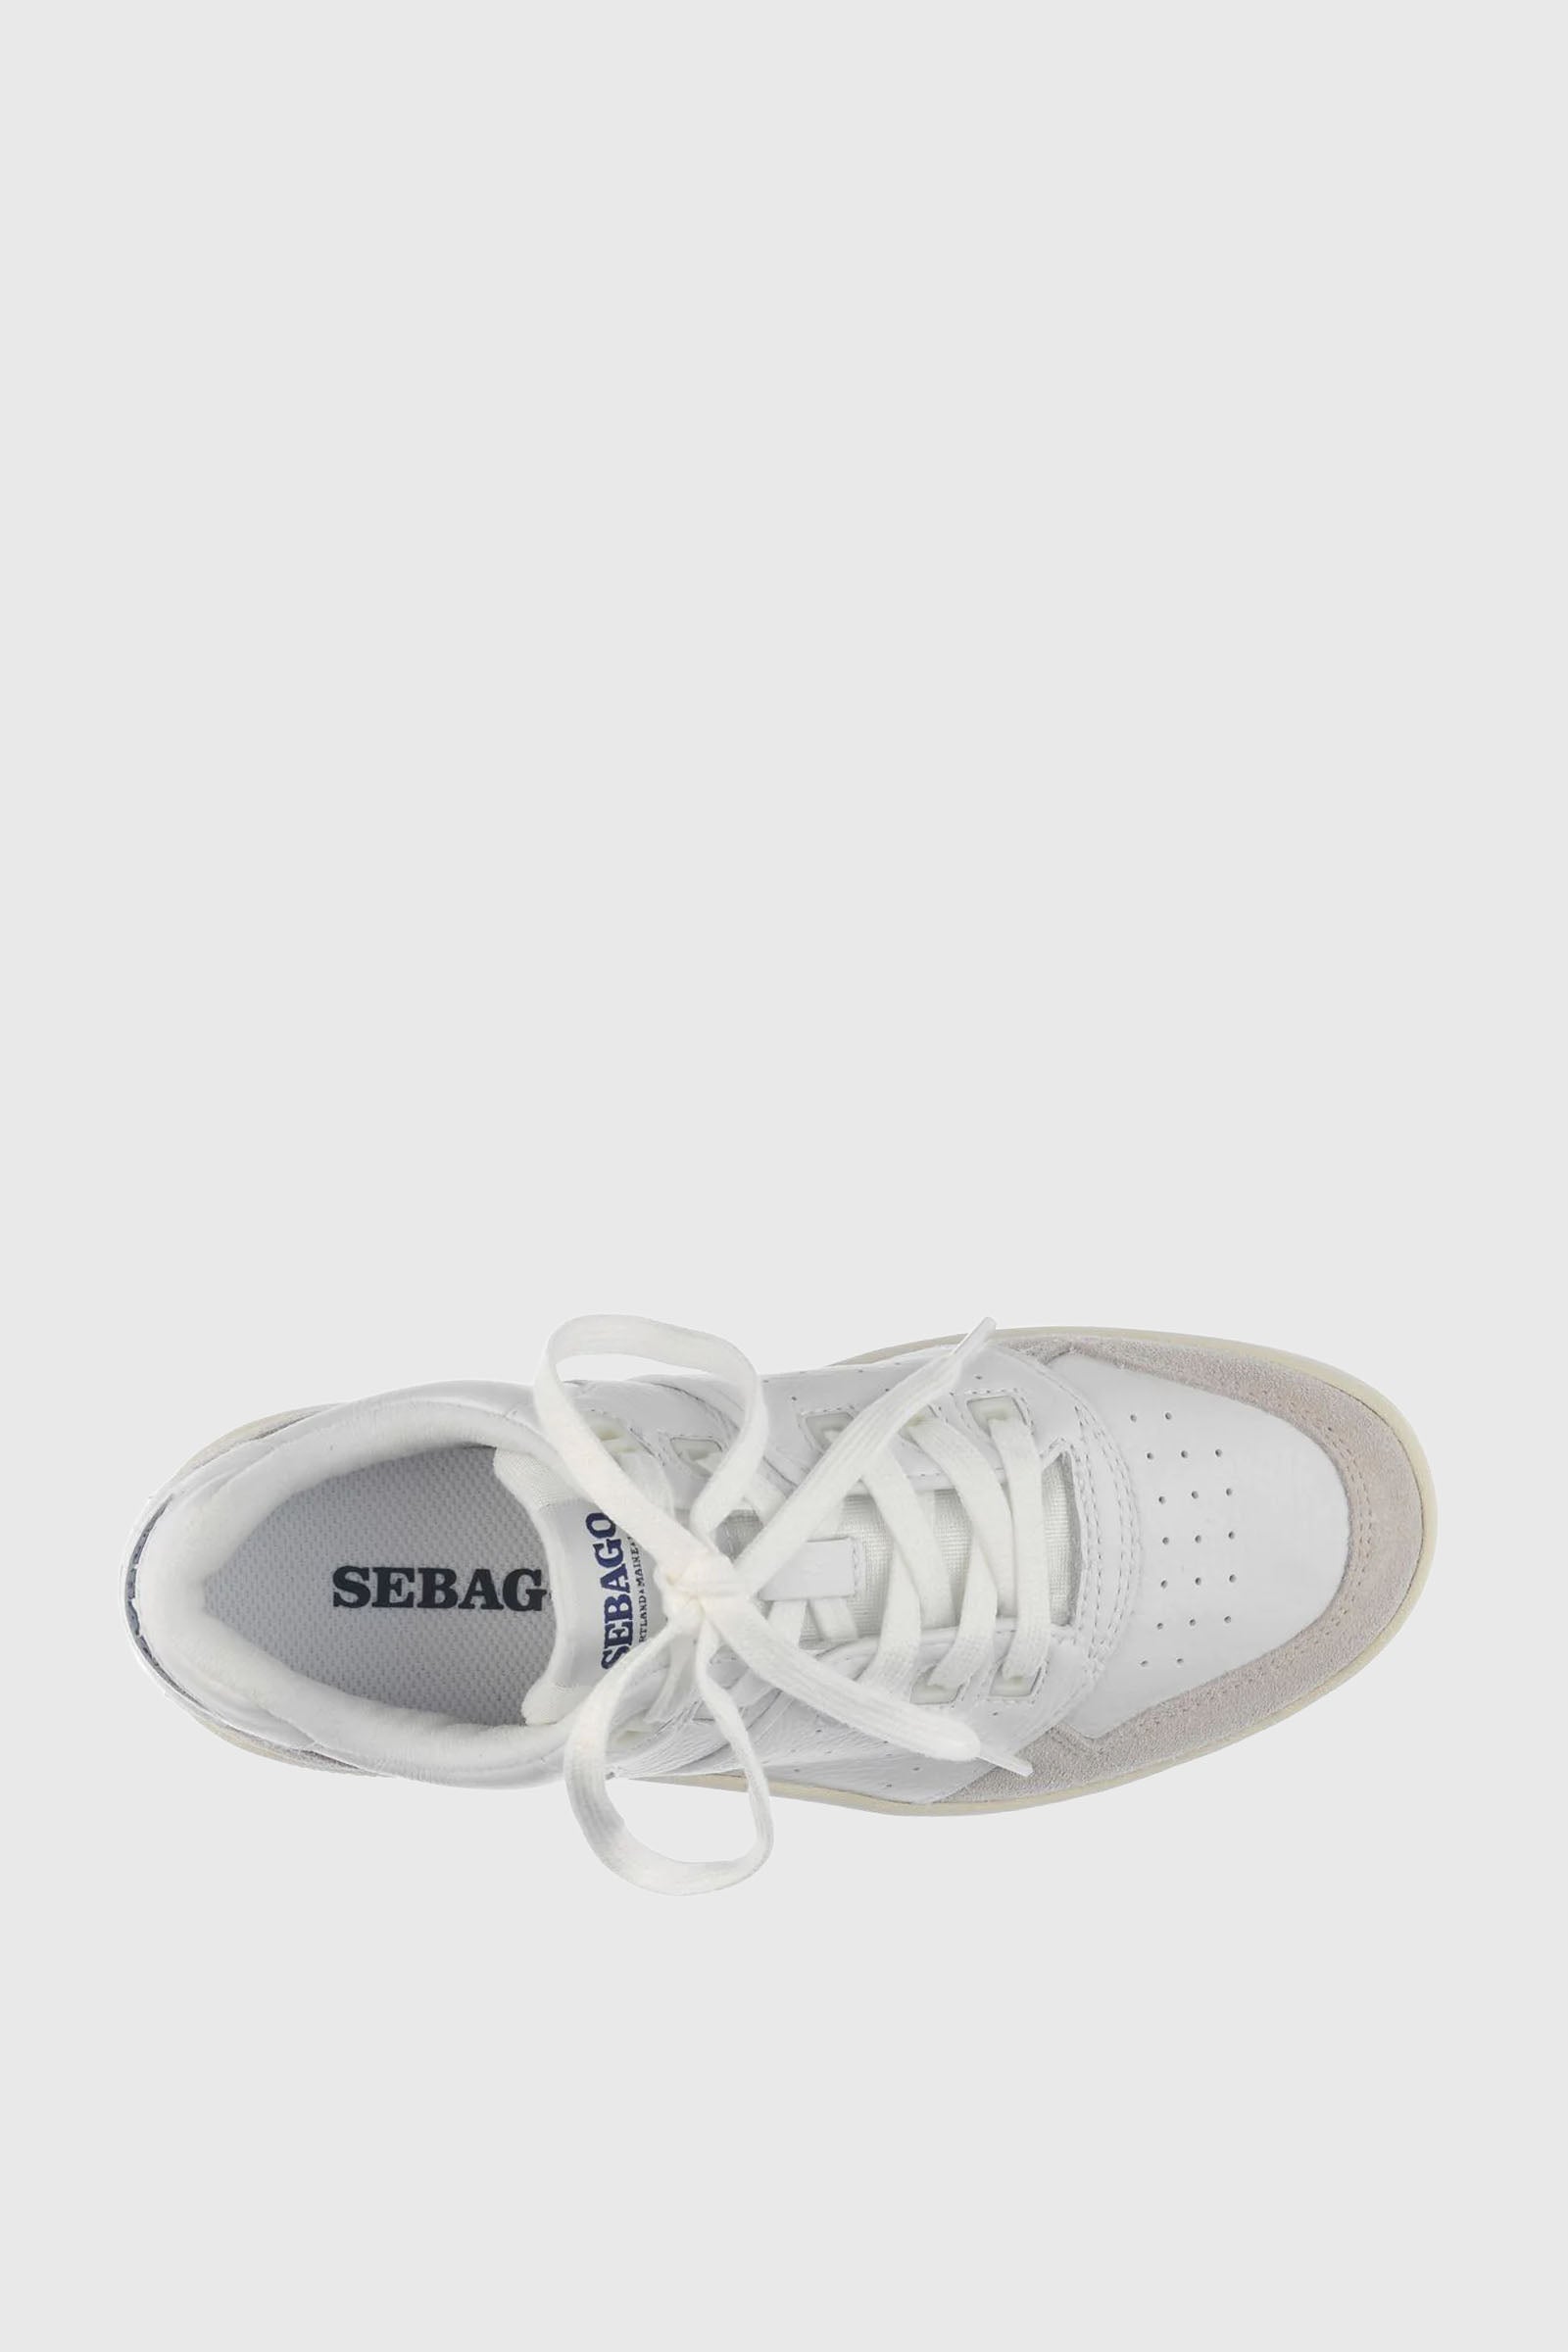 Sebago Sneaker Docksides Hurricane Leather White - 2